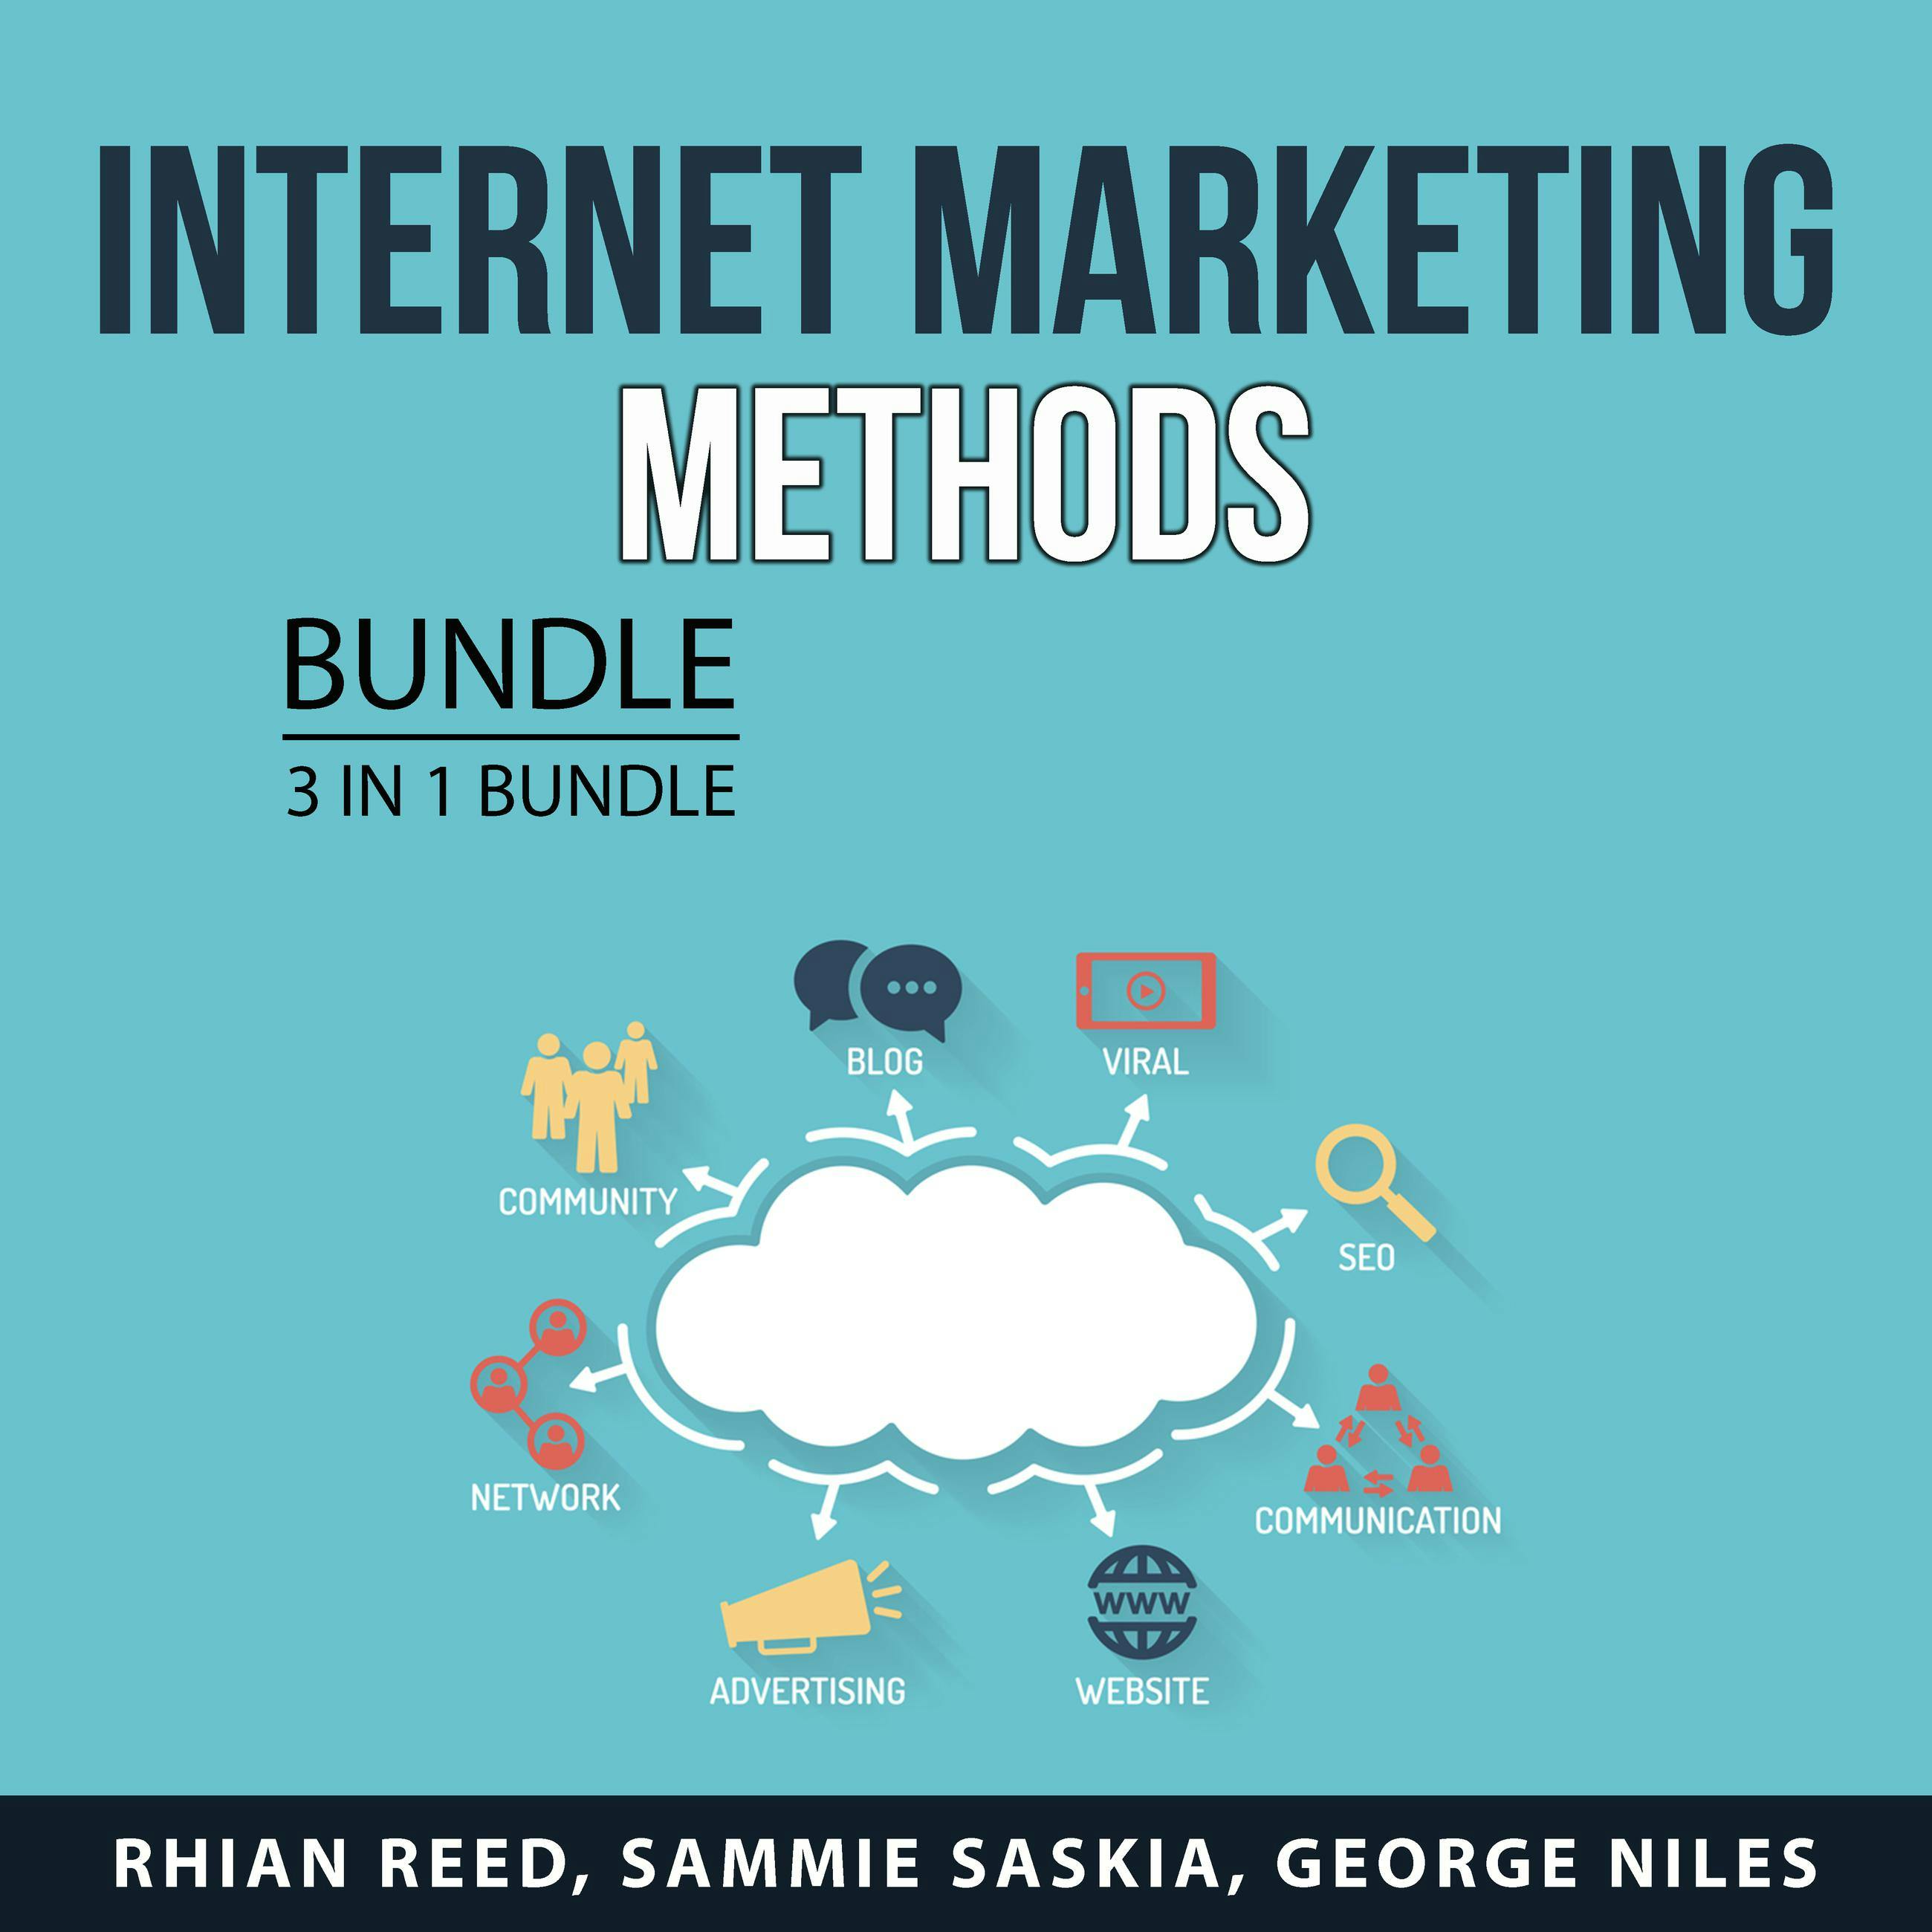 Internet Marketing Methods Bundle, 3 in 1 Bundle: Online Marketing Success, Internet Marketing Plan, and Marketing Systems - undefined